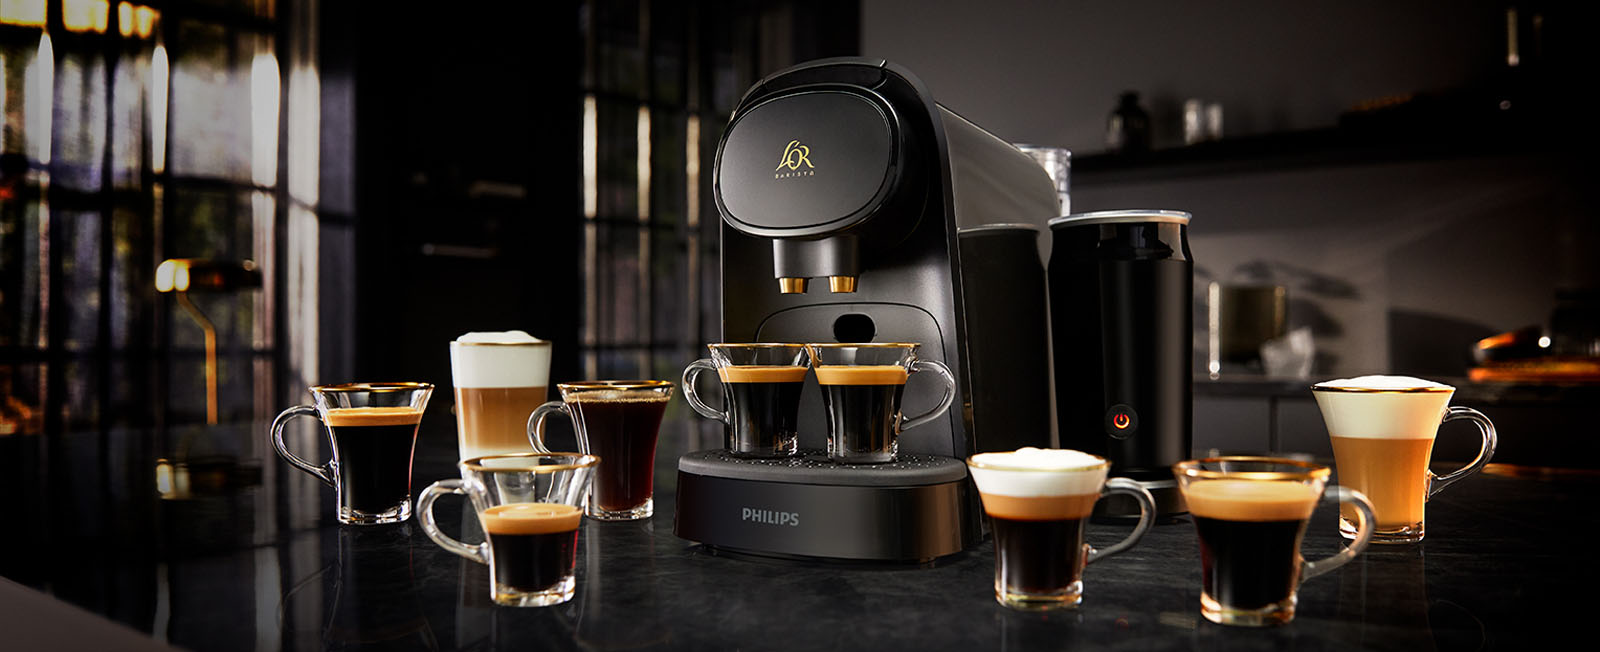 L'OR Barista System Coffee & Espresso Machine